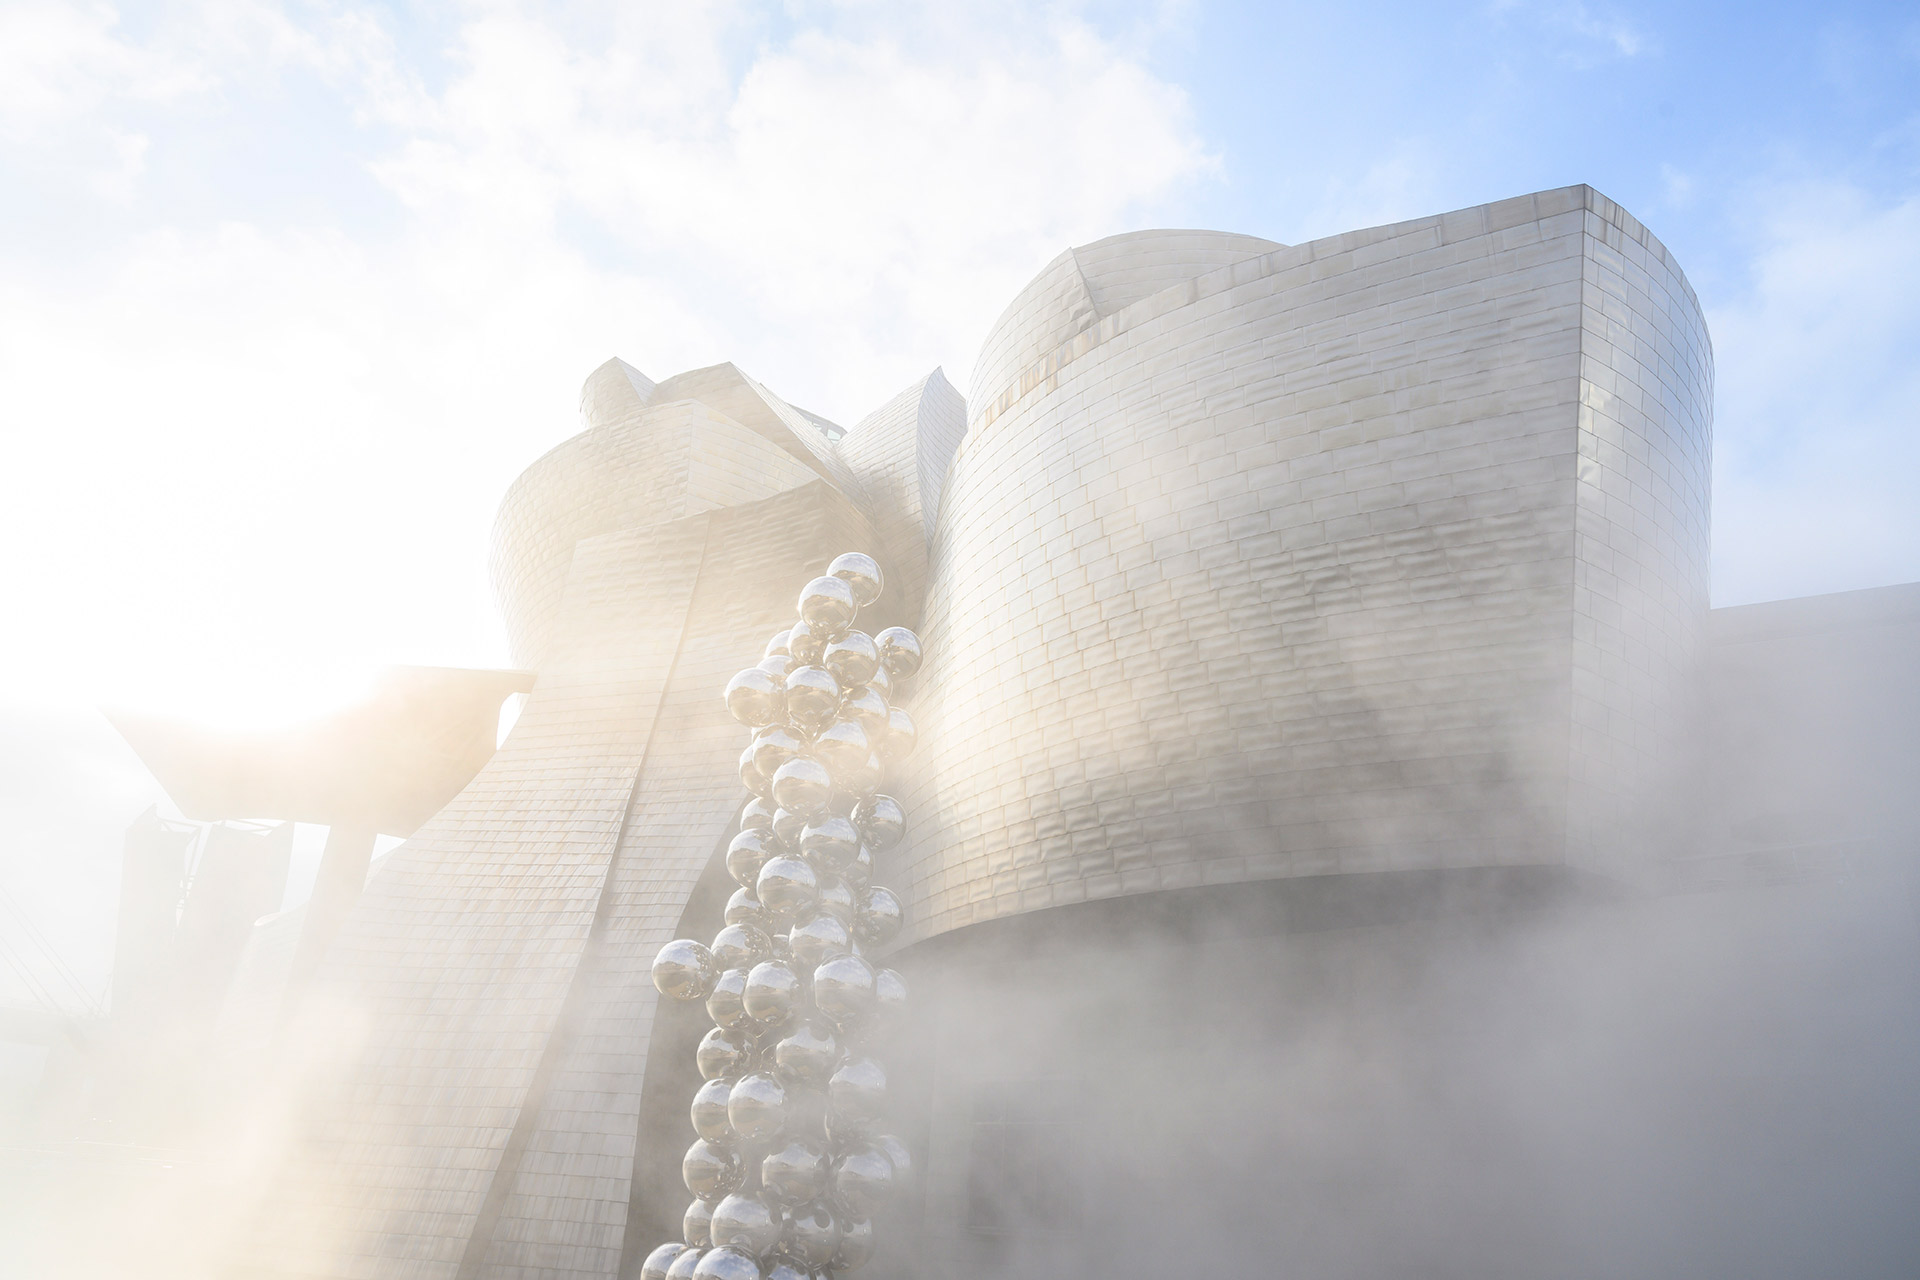 Sculpture de brouillard nº 08025 (F.O.G.) | Fujiko Nakaya | Guggenheim Bilbao Museoa